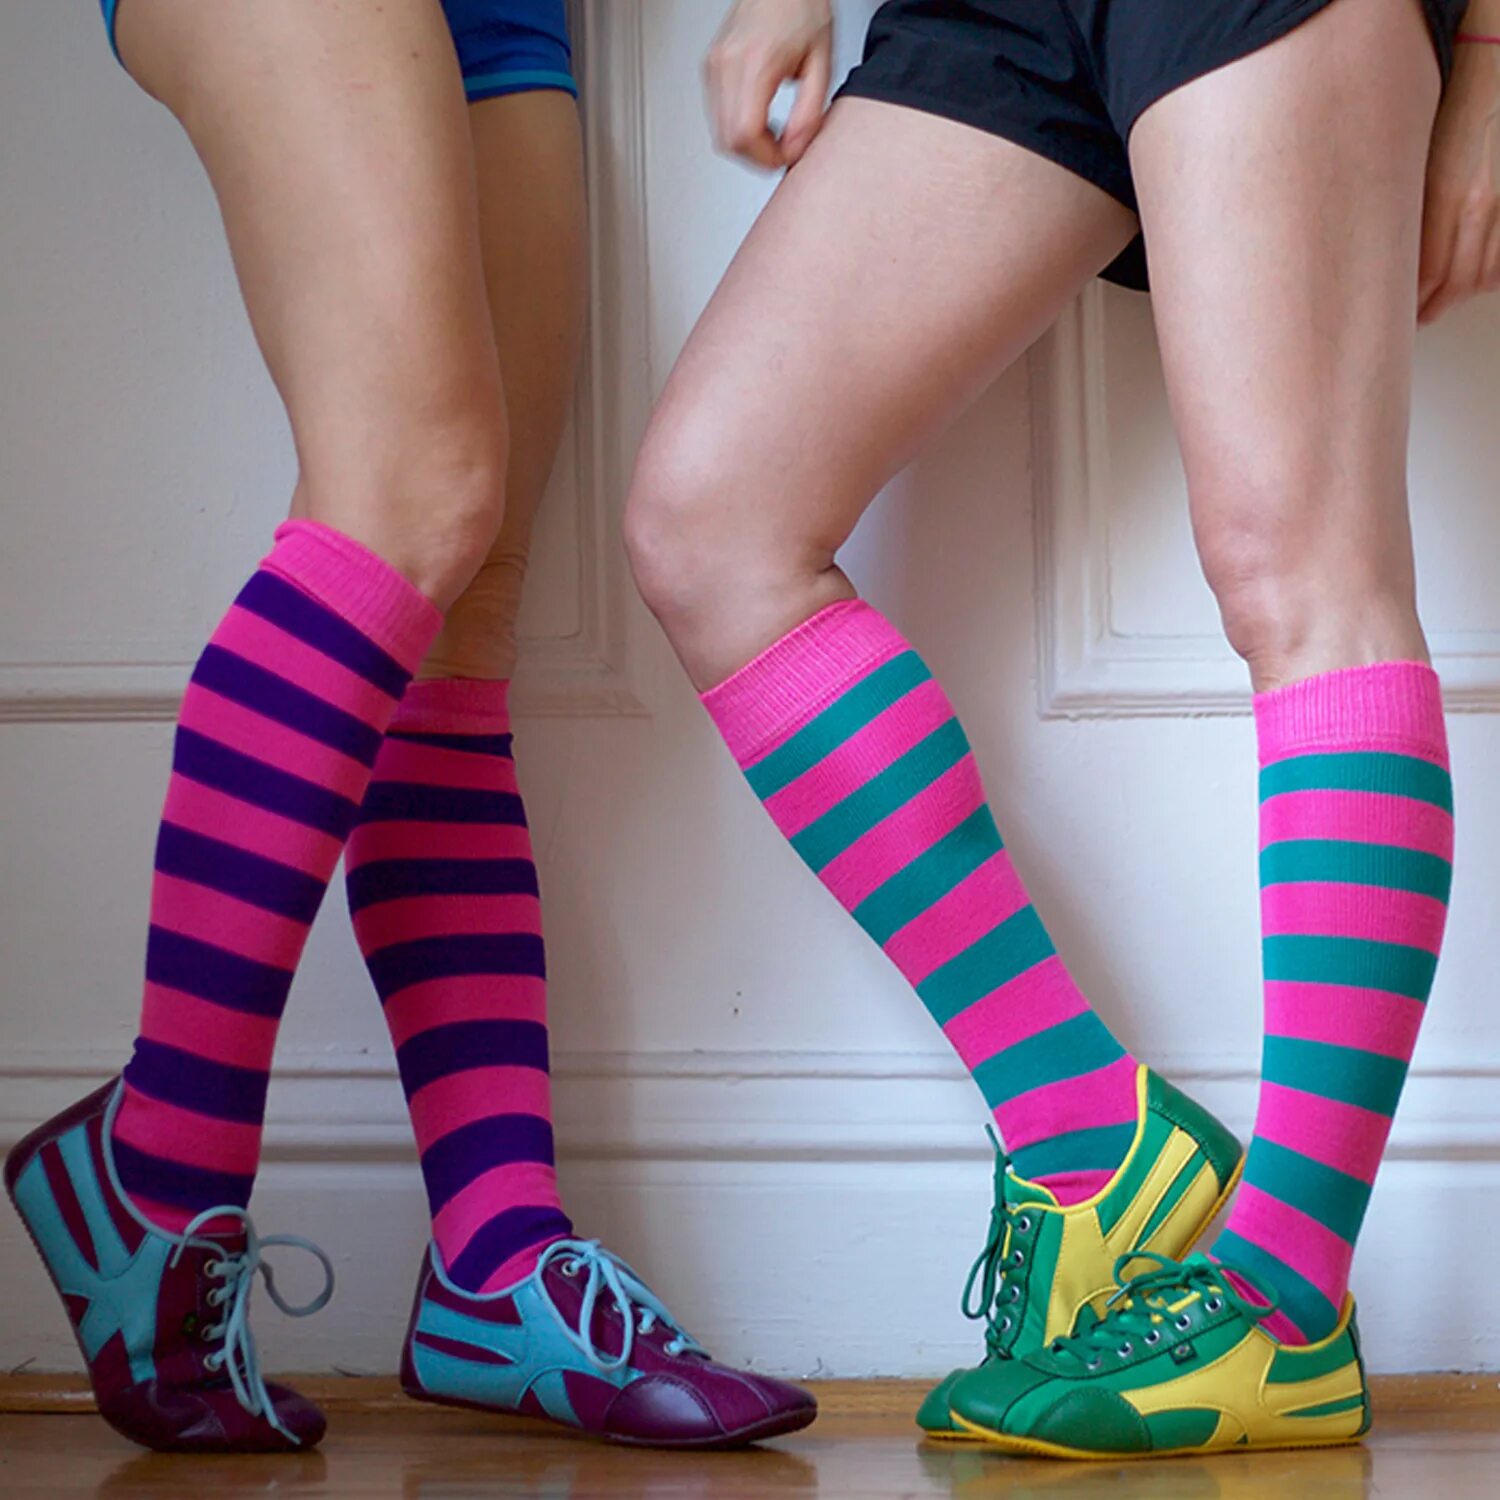 Девушки в цветных носках. Девочки в цветных носочках. Носки с лосинами. Носки с леггинсами. Wearing socks